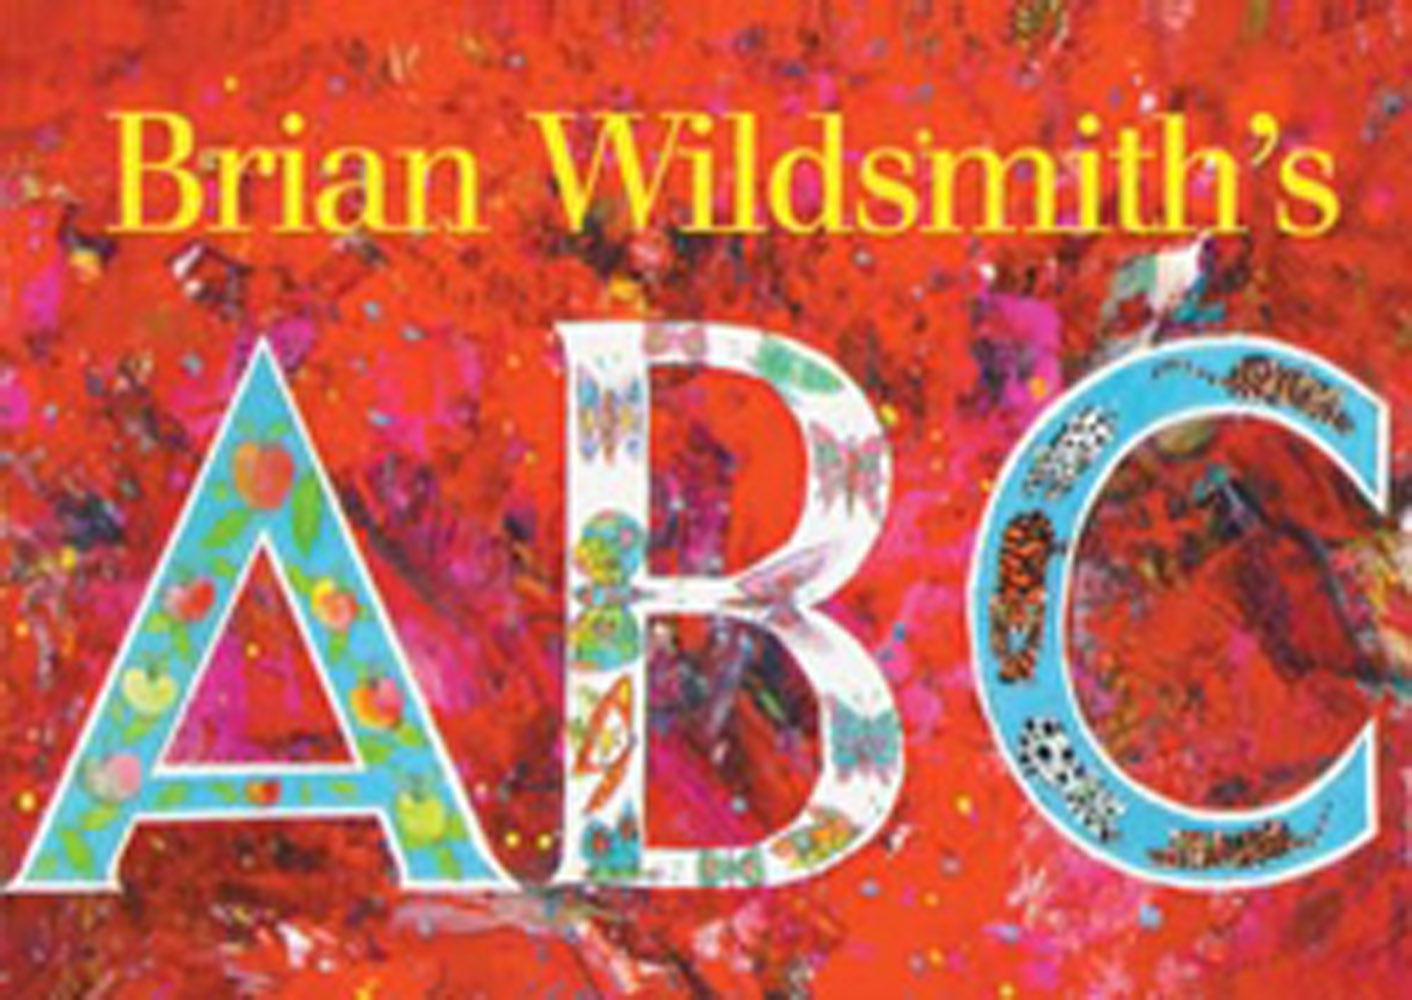 Brian Wildsmith's ABC